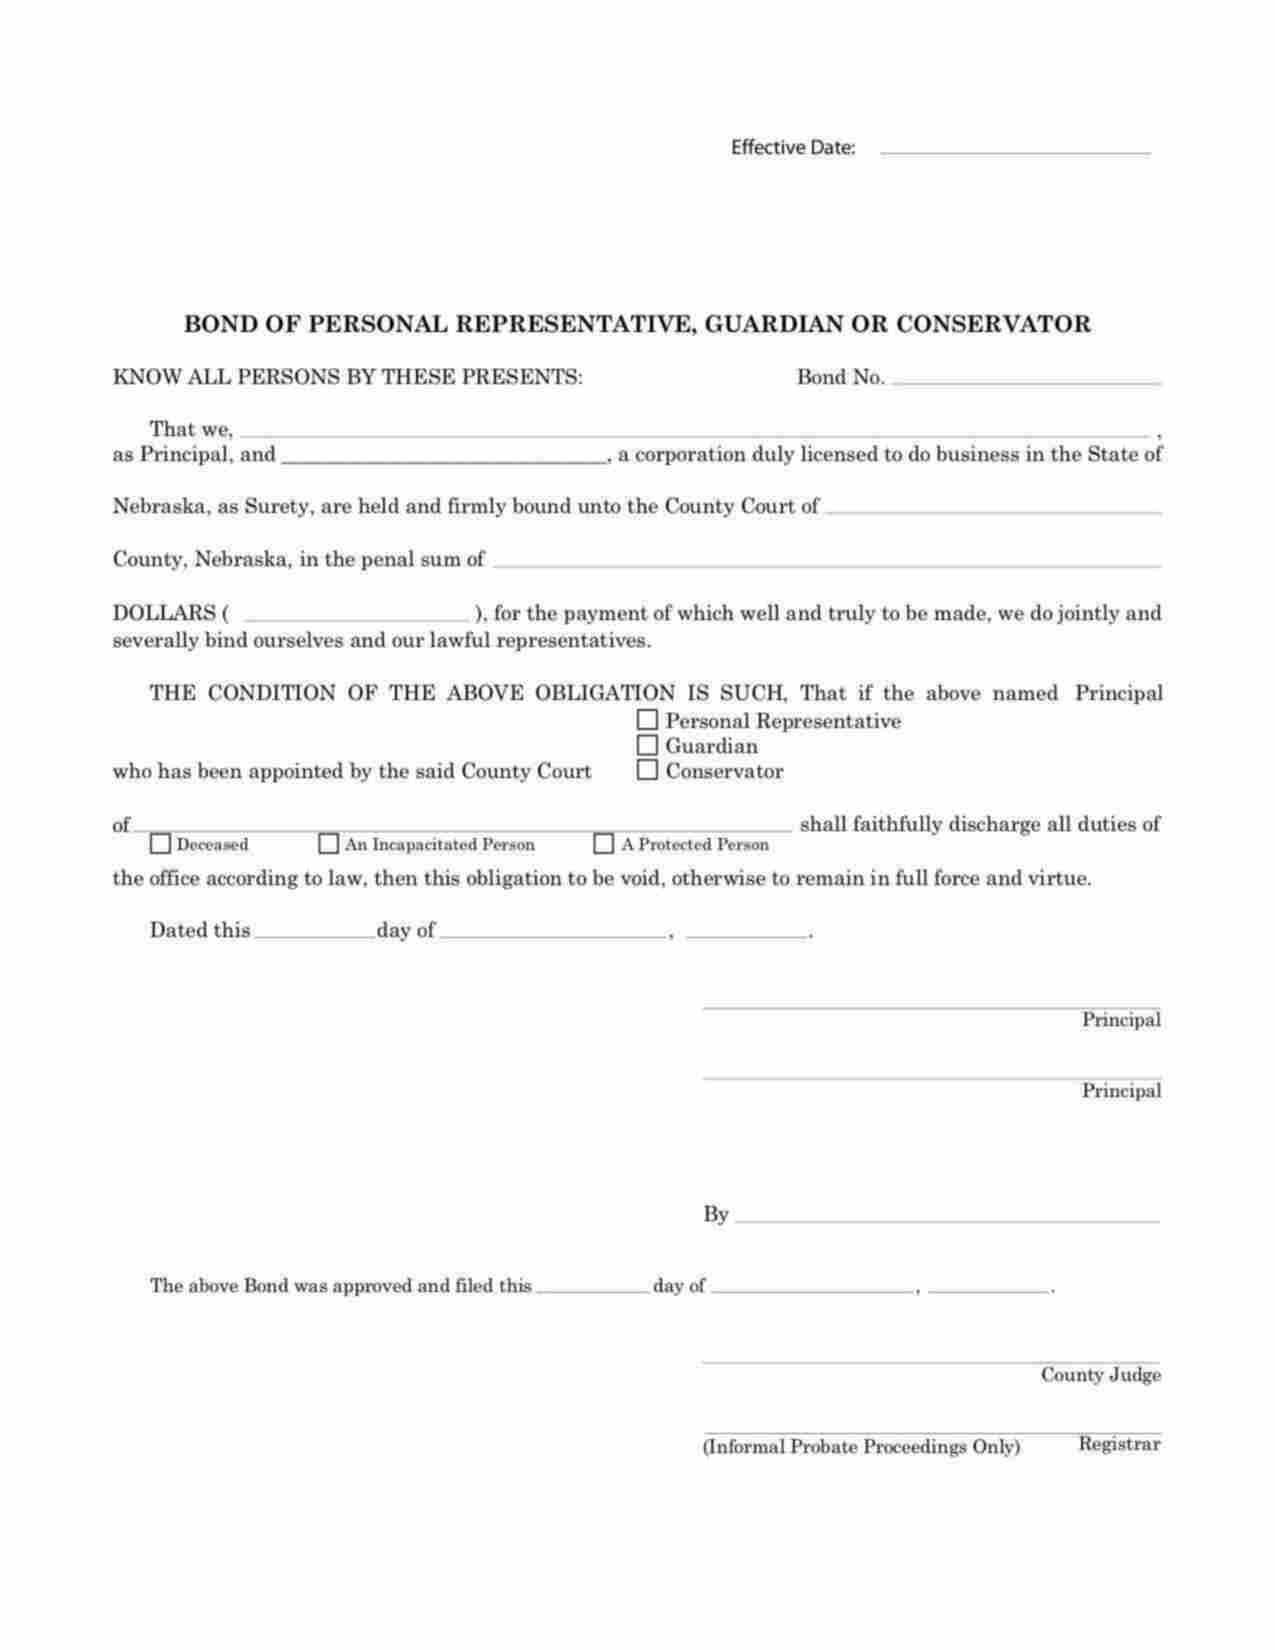 Nebraska Probate Administrator, Executor, Conservator, or Guardian Bond Form